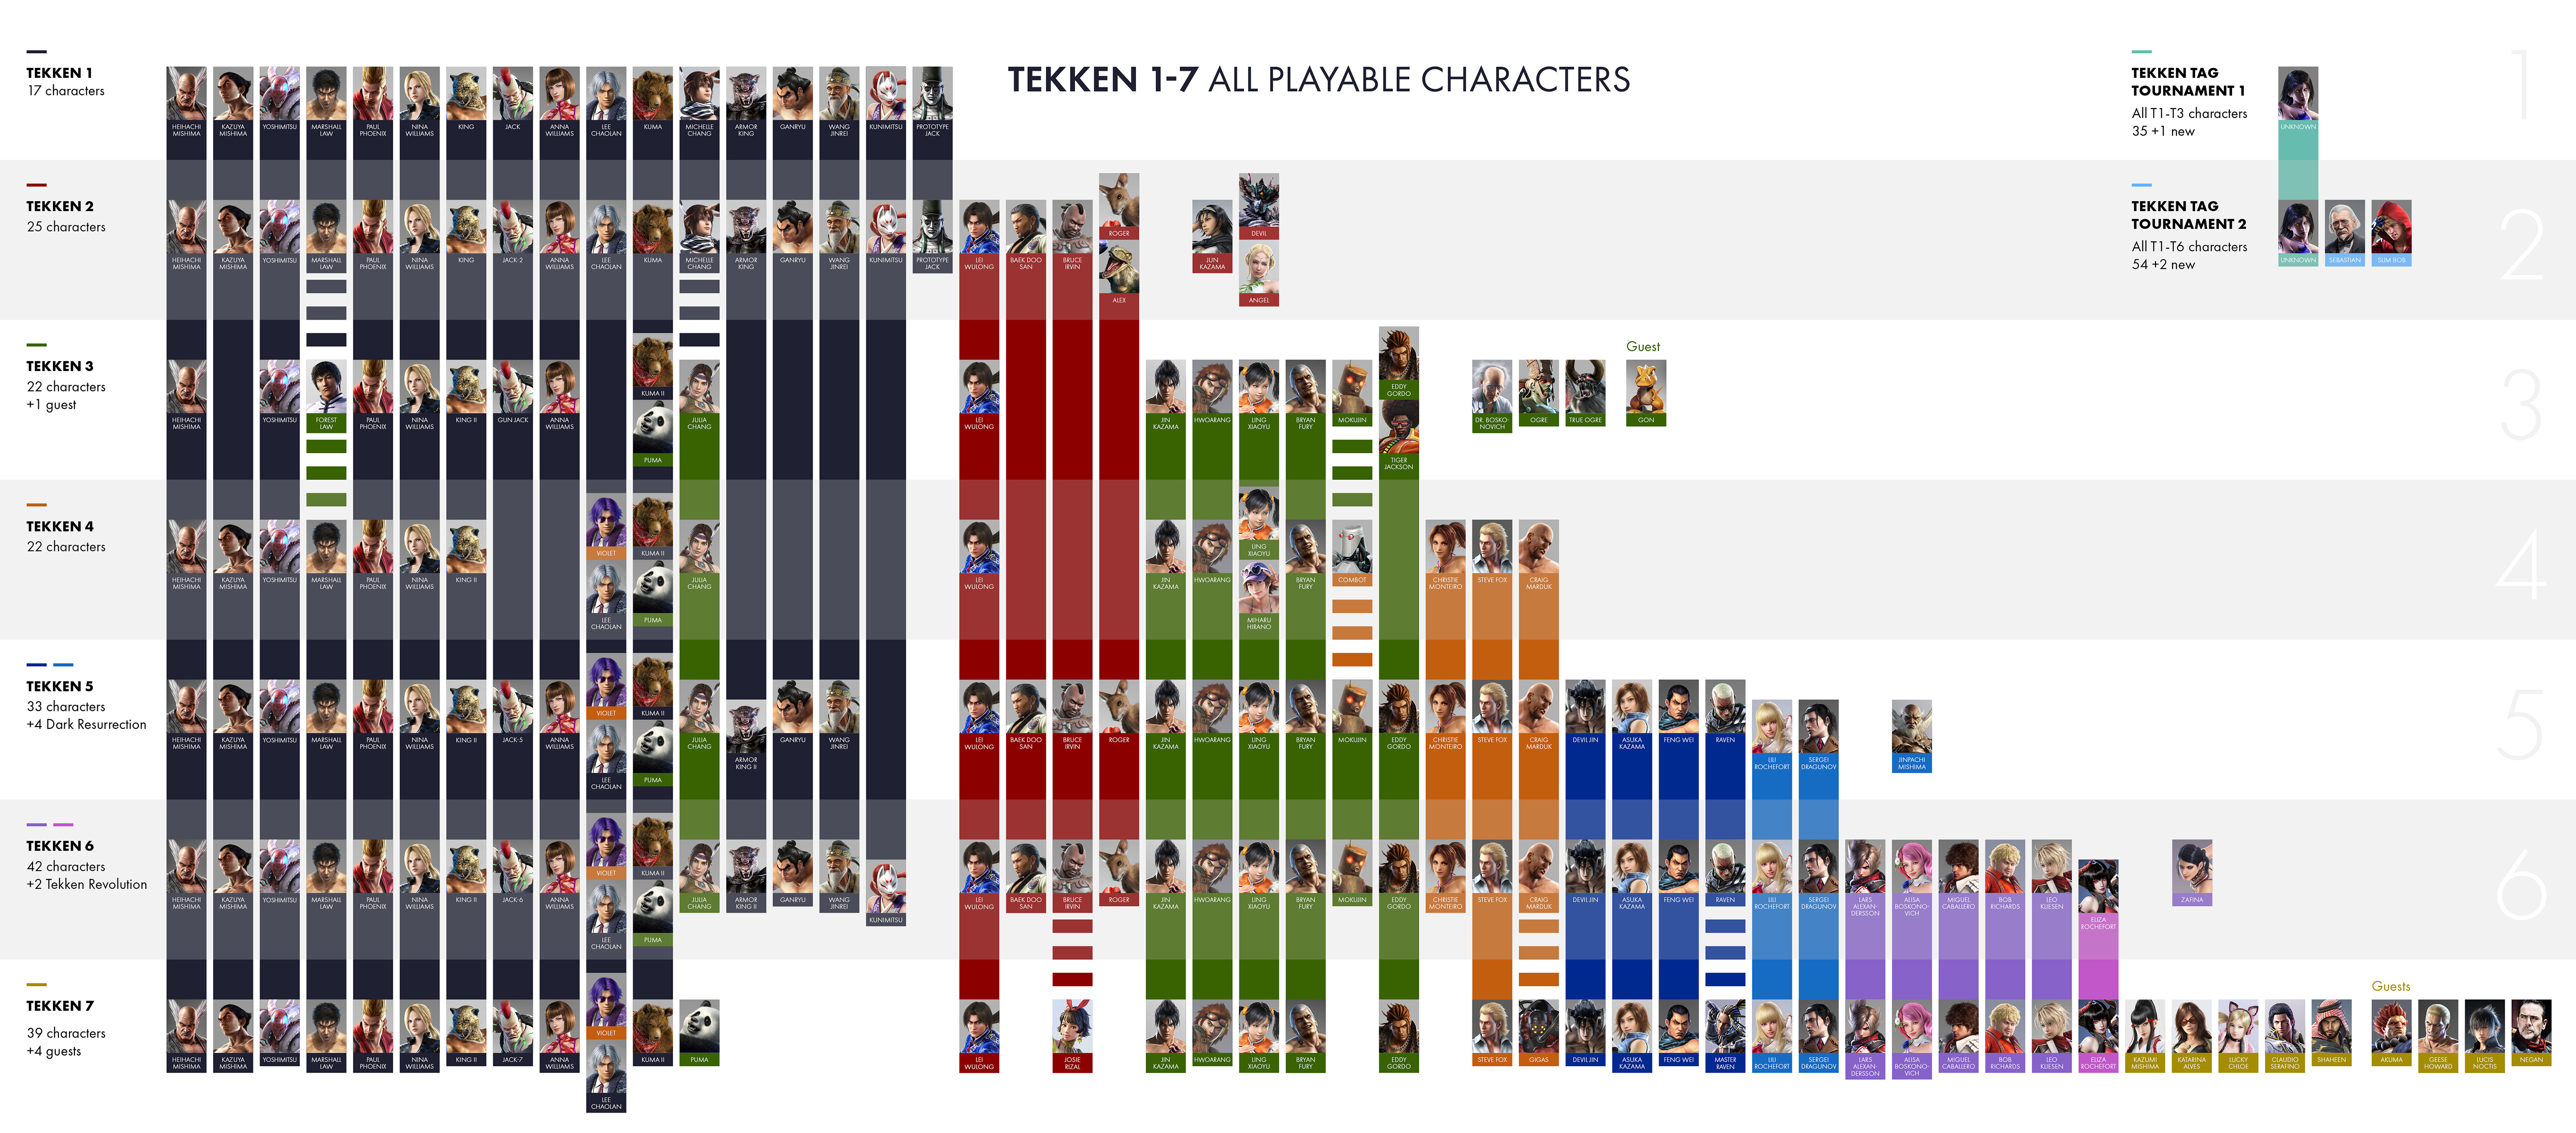 Tekken 8 ranks